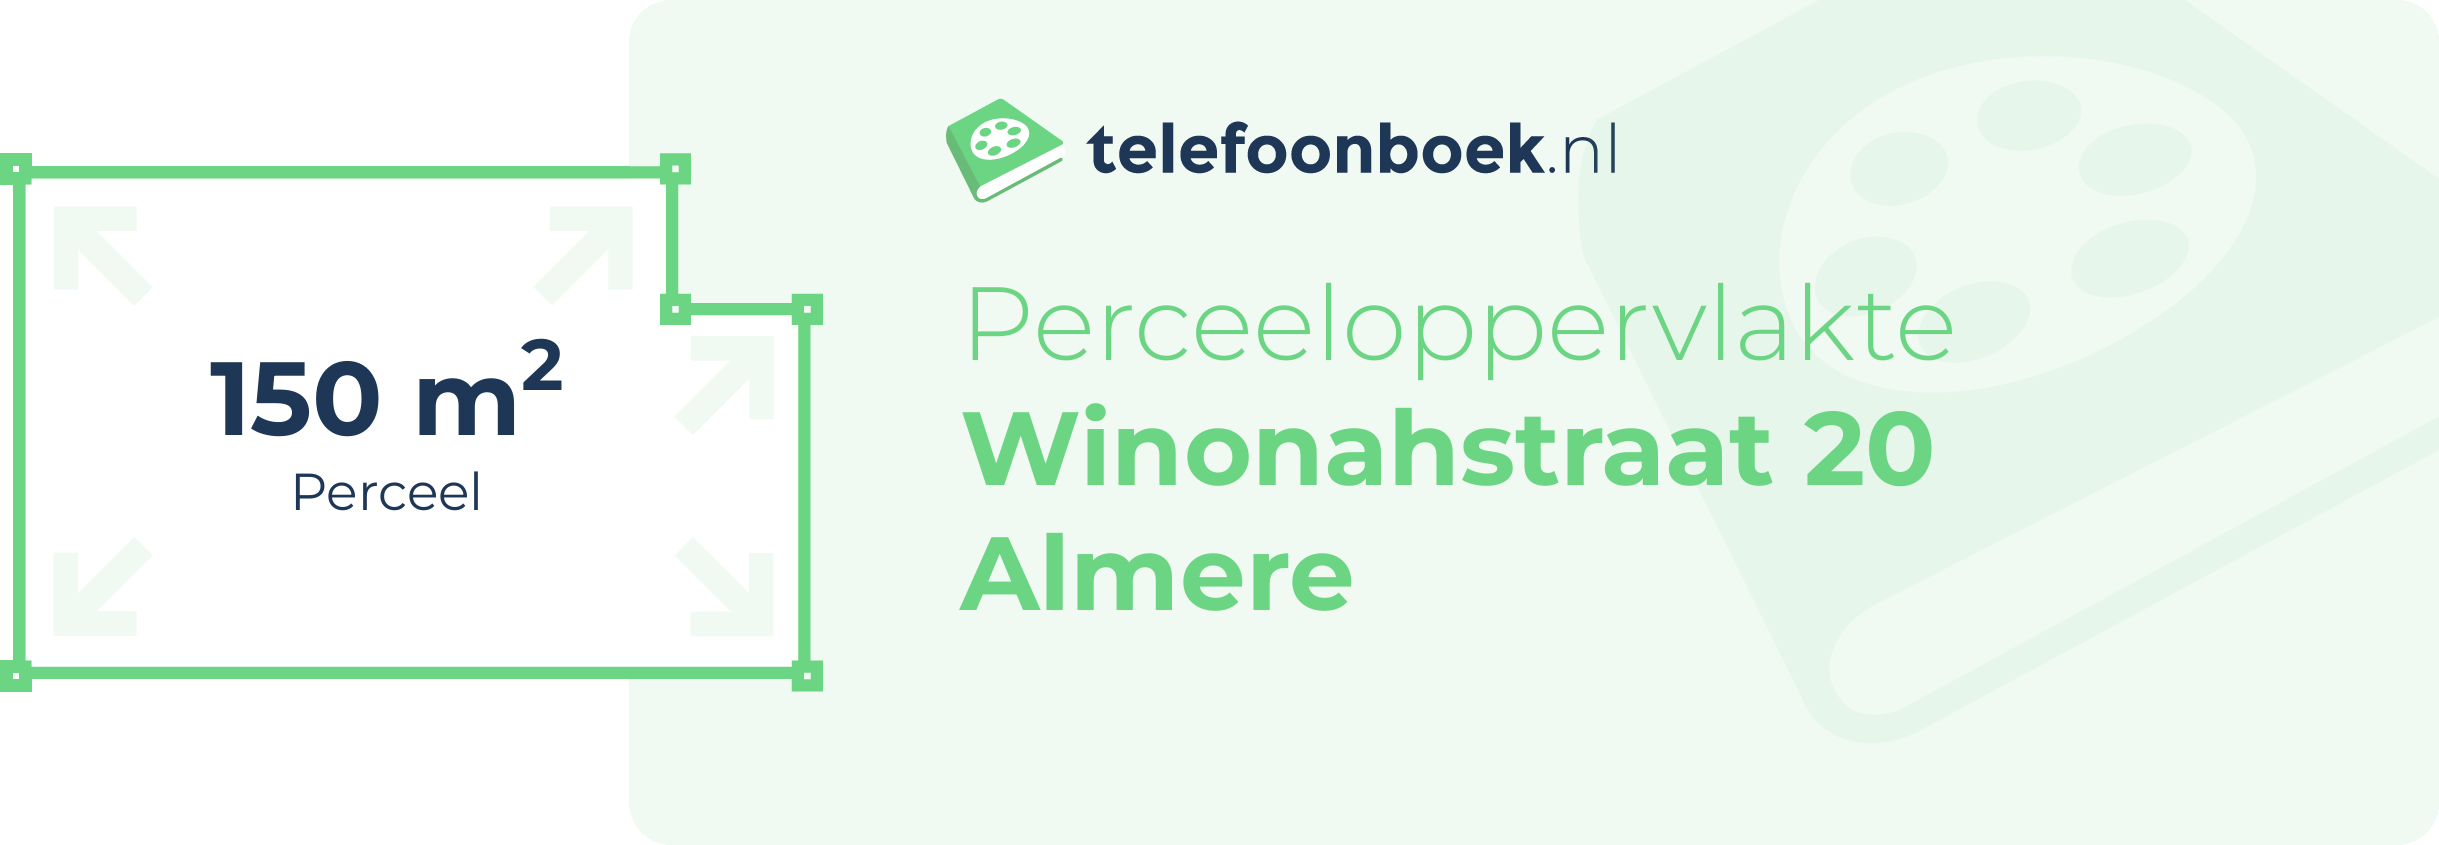 Perceeloppervlakte Winonahstraat 20 Almere